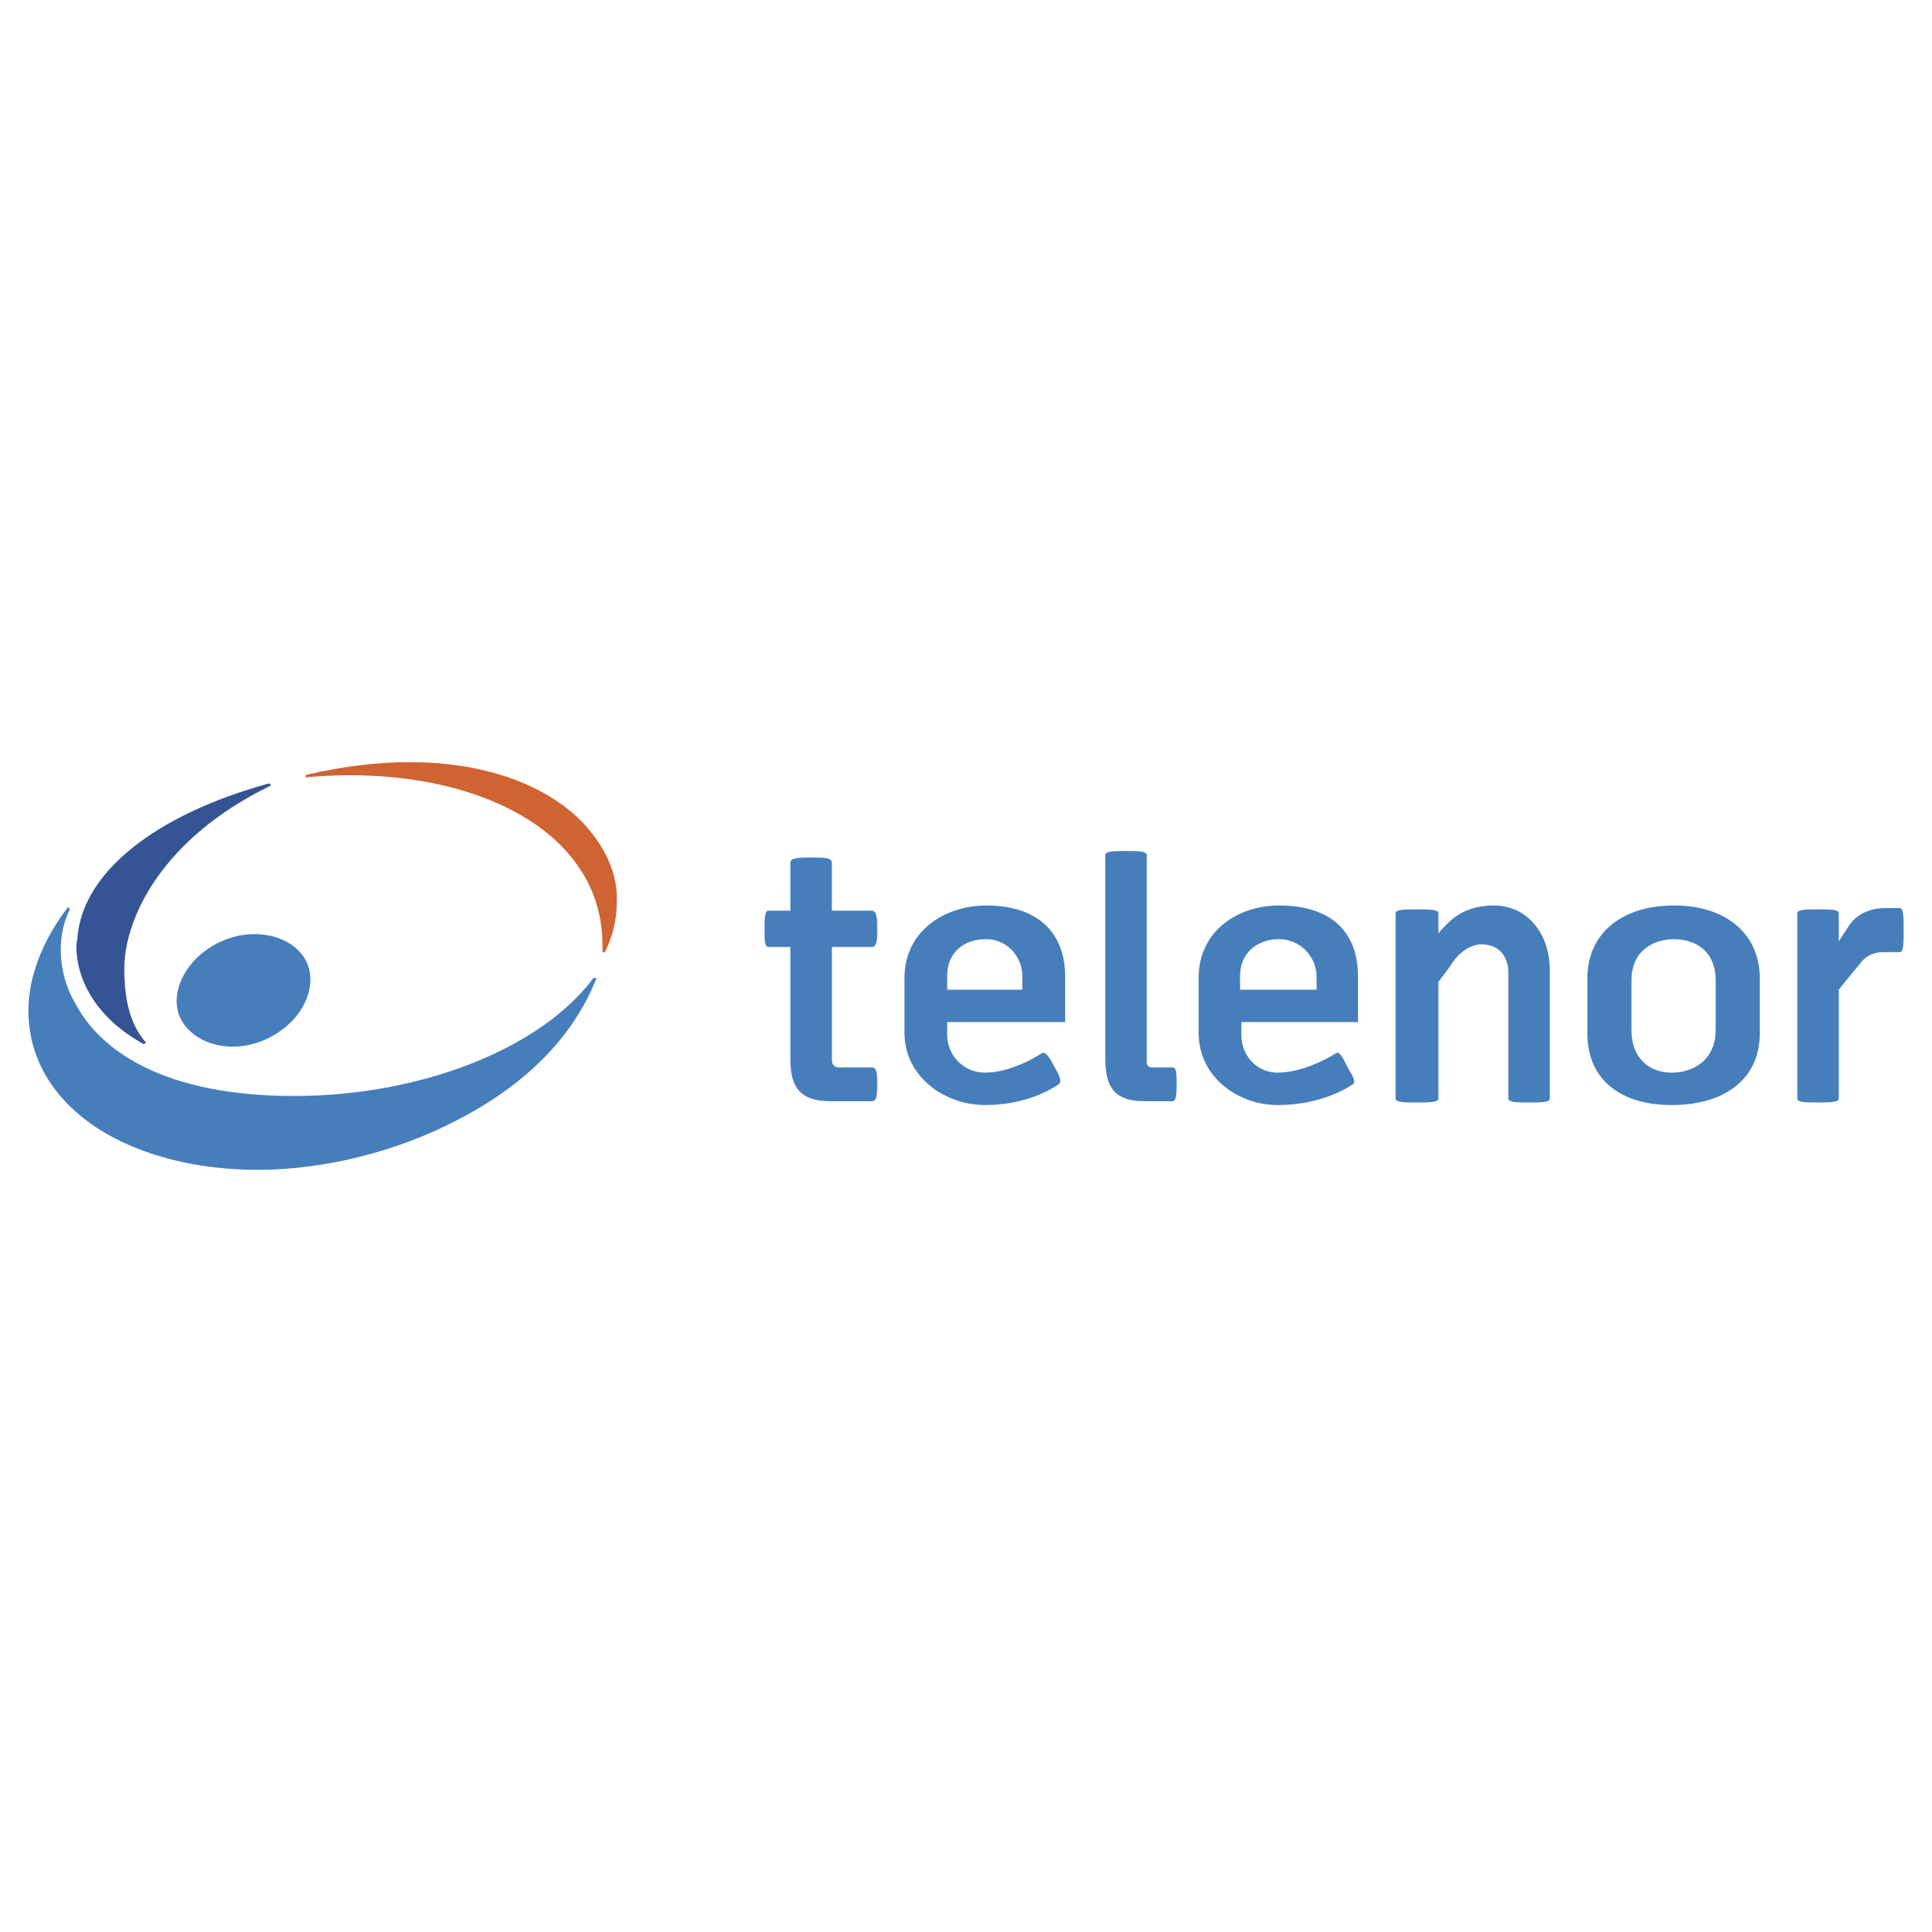 Telenor Logo - Telenor Logo PNG Transparent & SVG Vector